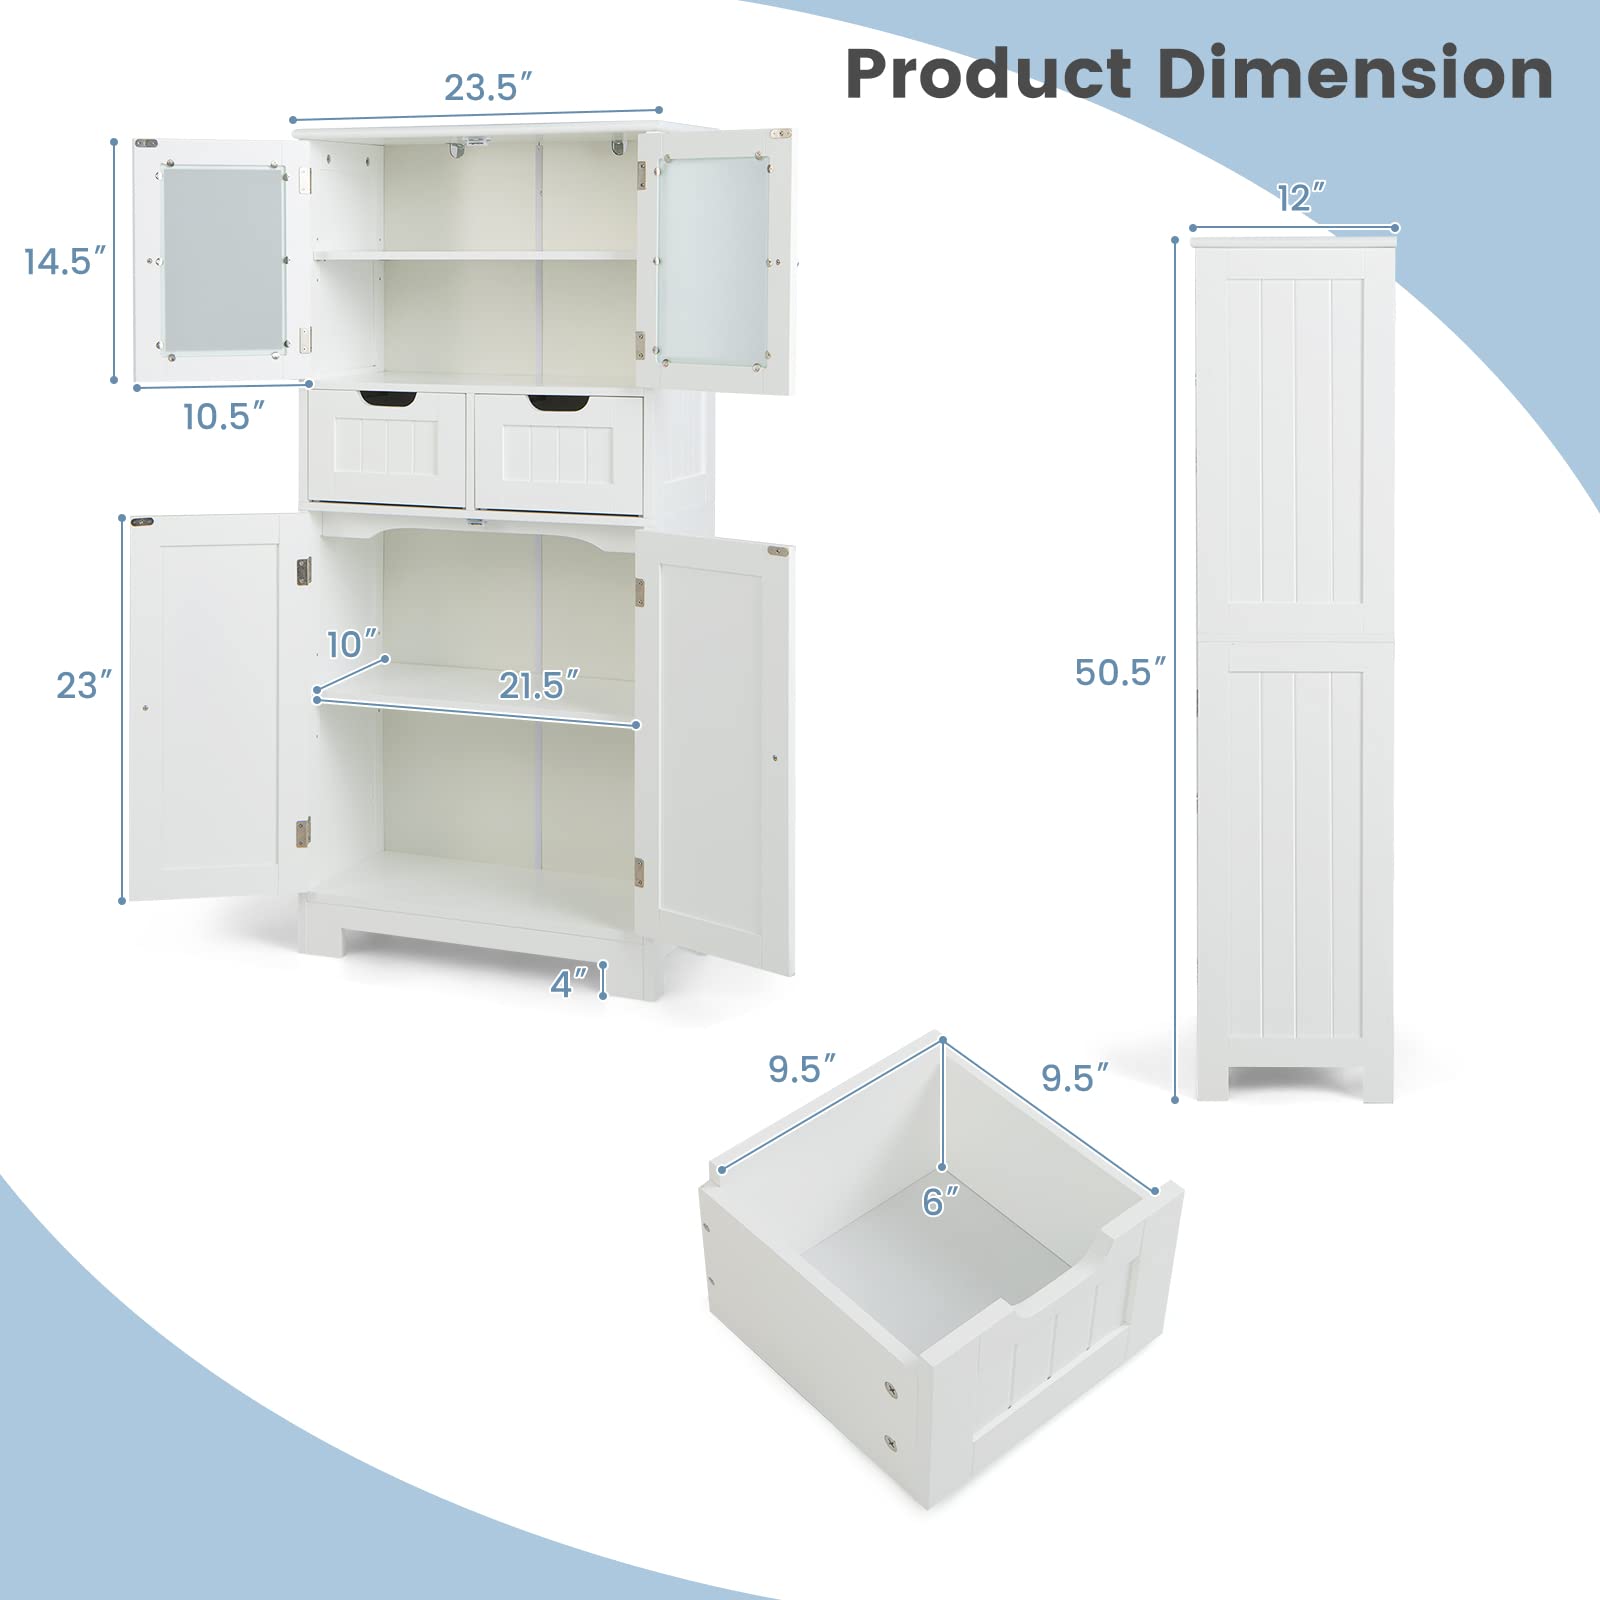 Giantex Floor Storage Cabinet, Freestanding Bathroom Cabinet with 2 Glass Doors, 2 Drawers & Adjustable Shelves, White